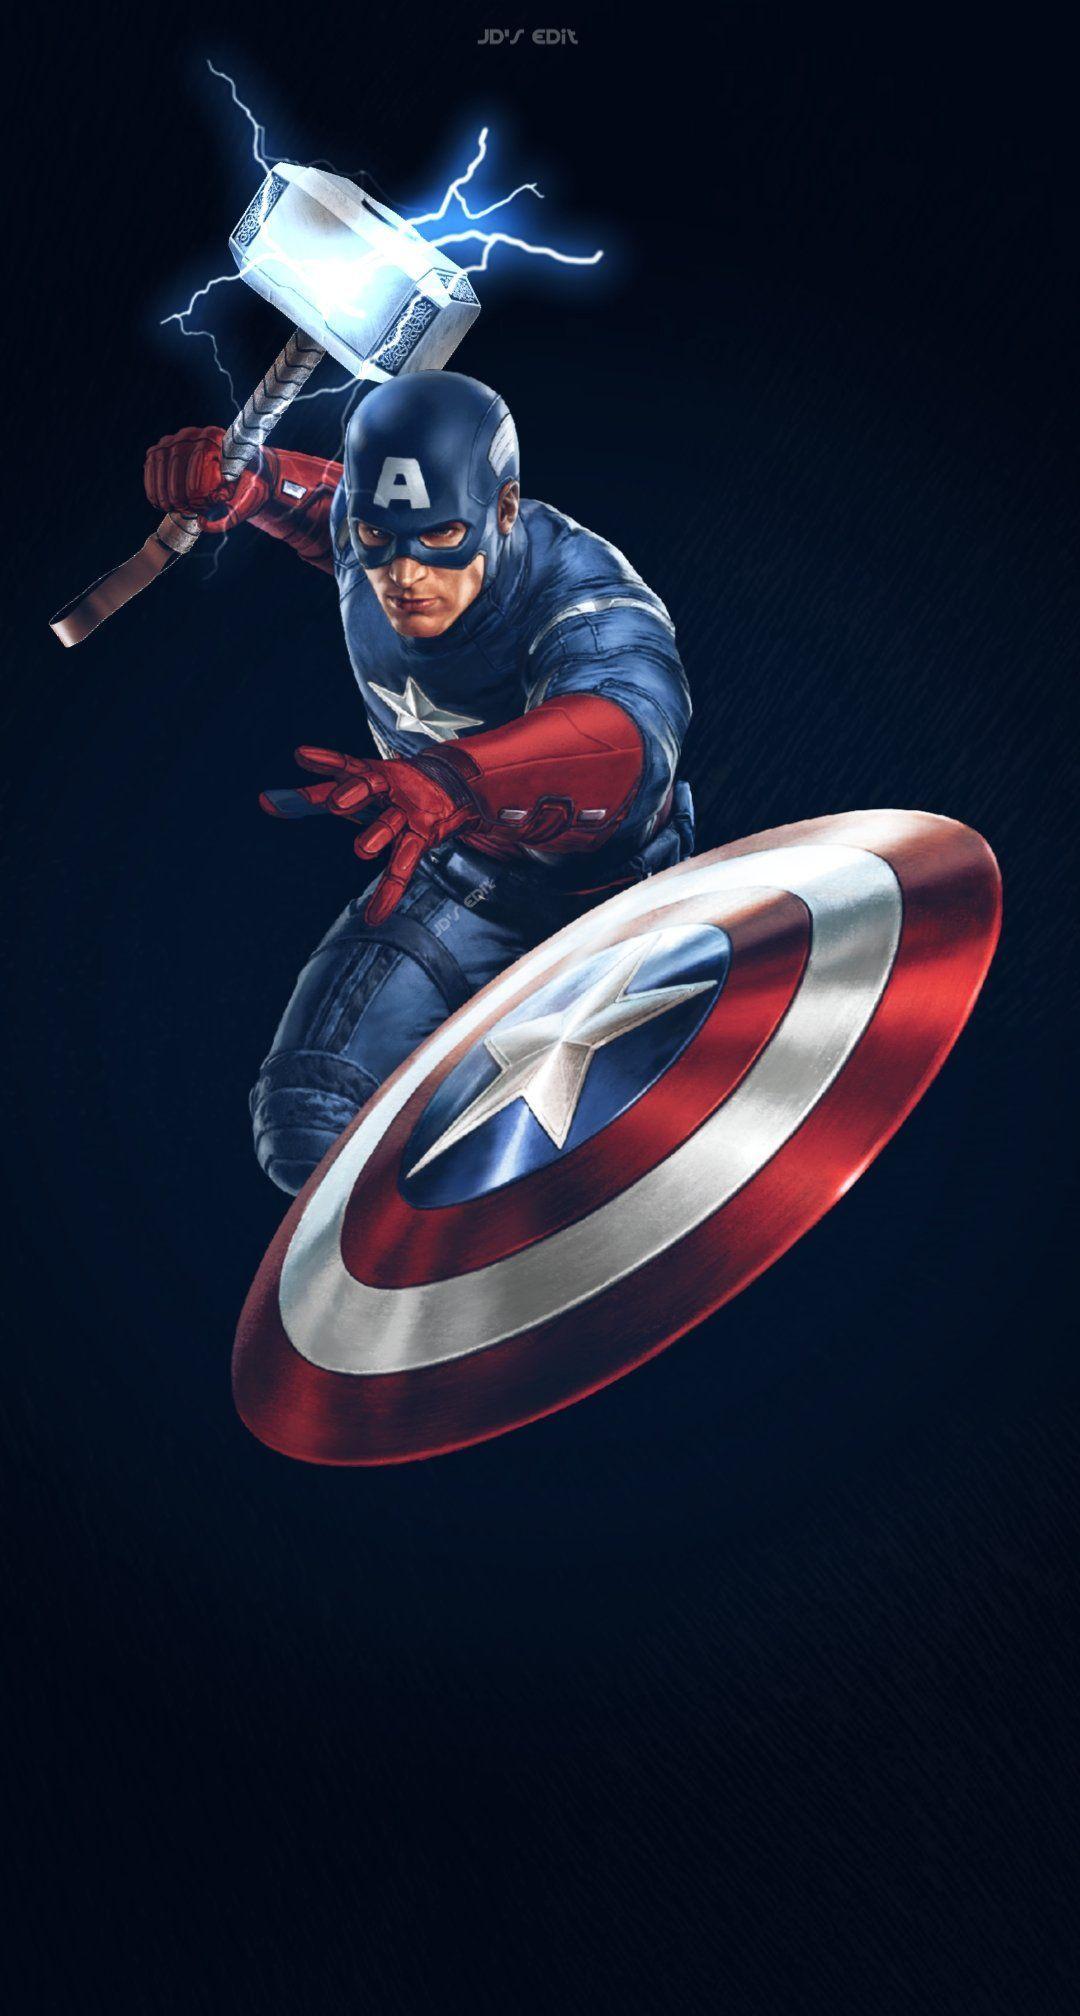 1080 x 2016 · jpeg - Captain America Mjolnir Wallpapers - Wallpaper Cave